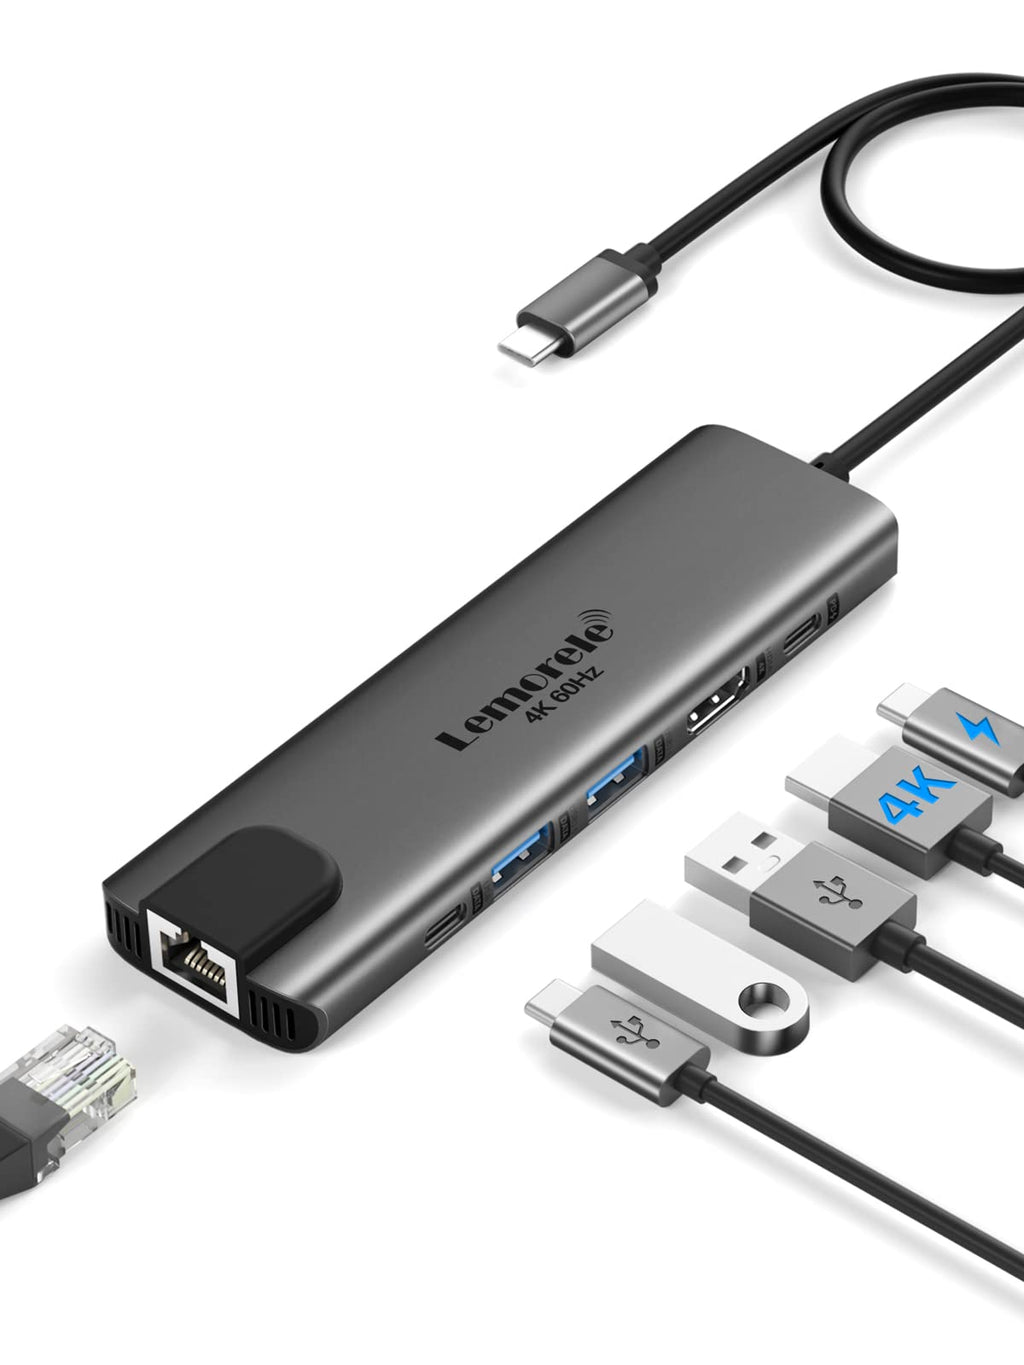 [Australia - AusPower] - Lemorele USB C Hub 4K 60Hz, 6 in 1 USB C Multiport Adapter w/4K HDMI, 2 USB-A 3.0, Gigabit Ethernet, 100W PD, USB C 3.0 5Gbps Data Port for MacBook Pro/Air M1 2020, iPad Pro 2021 /Mini 6, Surface Pro 